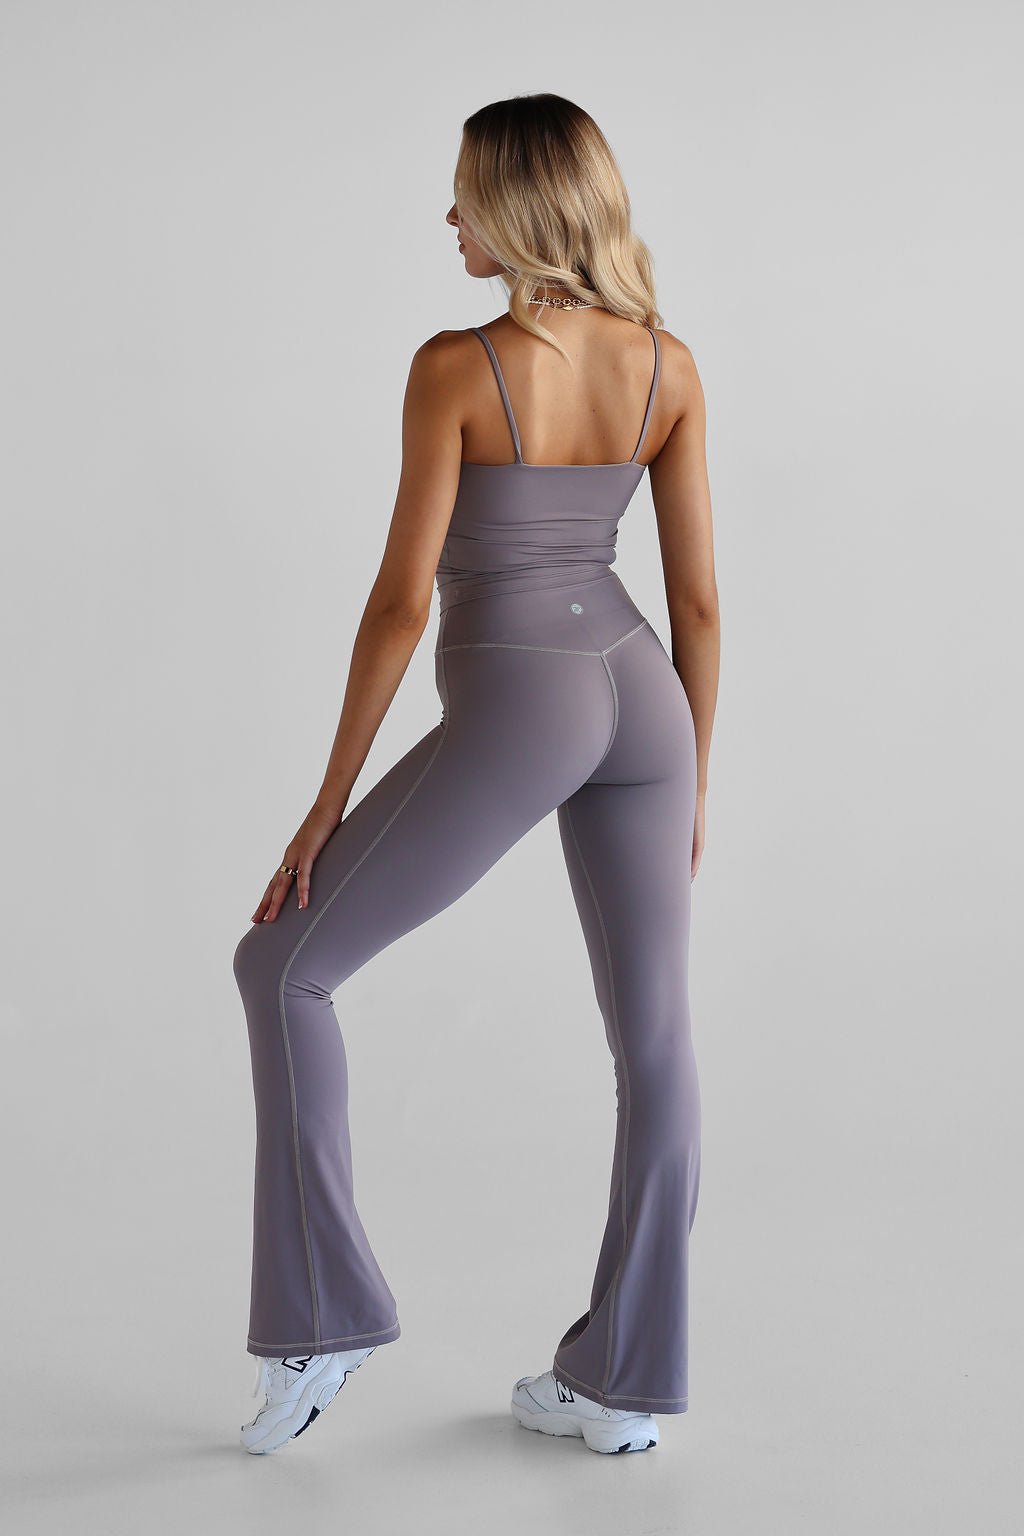 Buy Violet Grey Leggings for Women by Skyria Online | Ajio.com